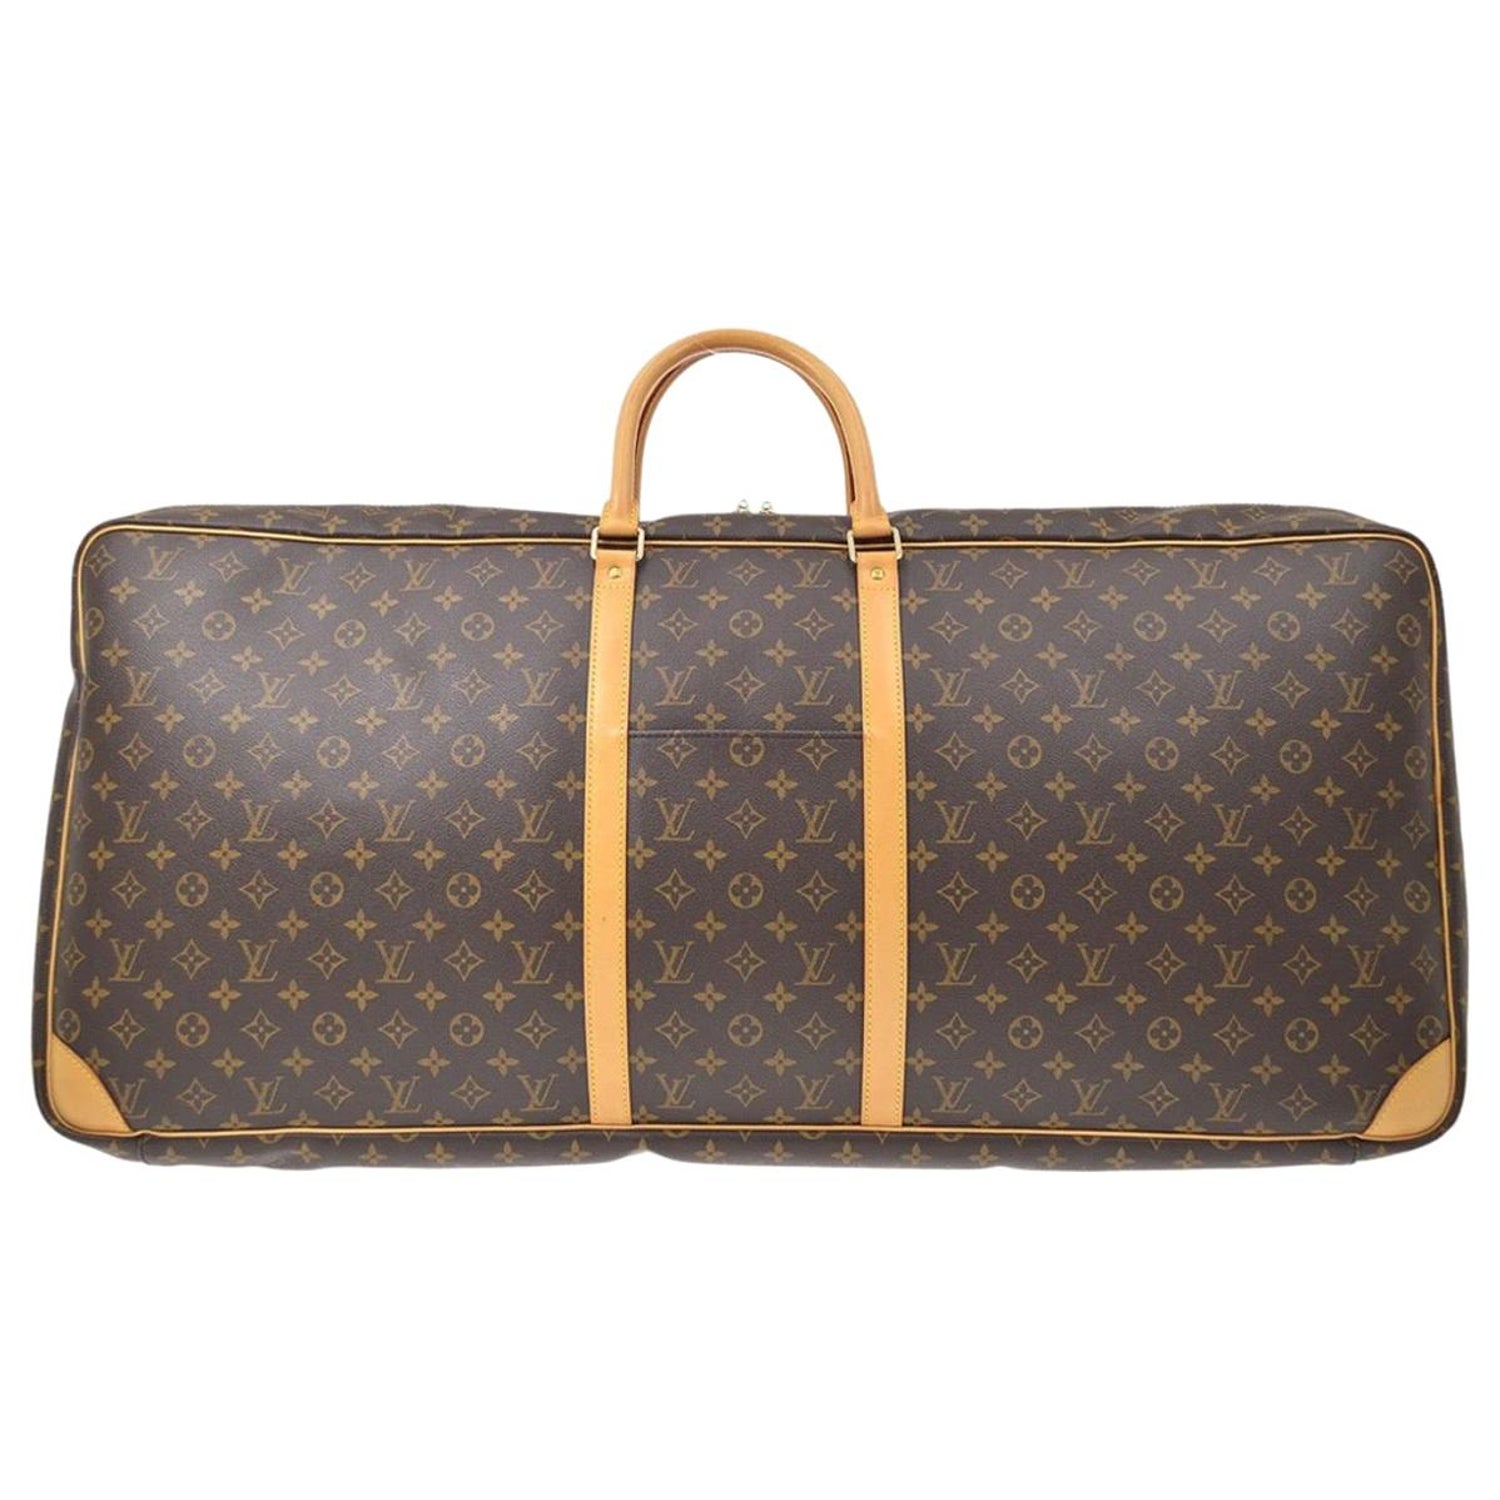 Louis Vuitton Men's Travel Bags - 2 For Sale on 1stDibs | louis vuitton  travel bag mens, louis vuitton mens clutch bag, louis vuitton mens carry on